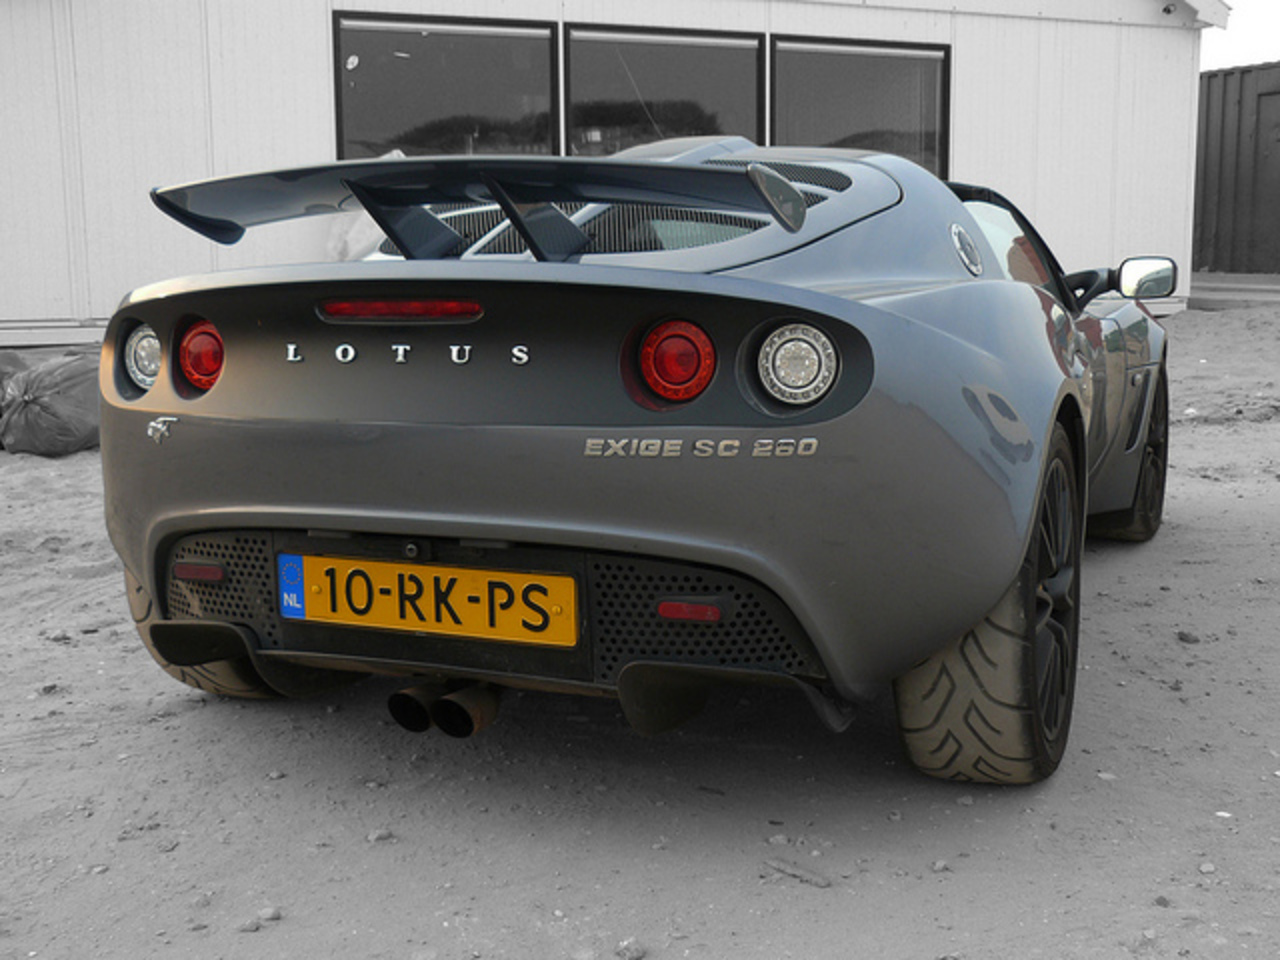 Lotus Exige SC 260 | Flickr - Photo Sharing!